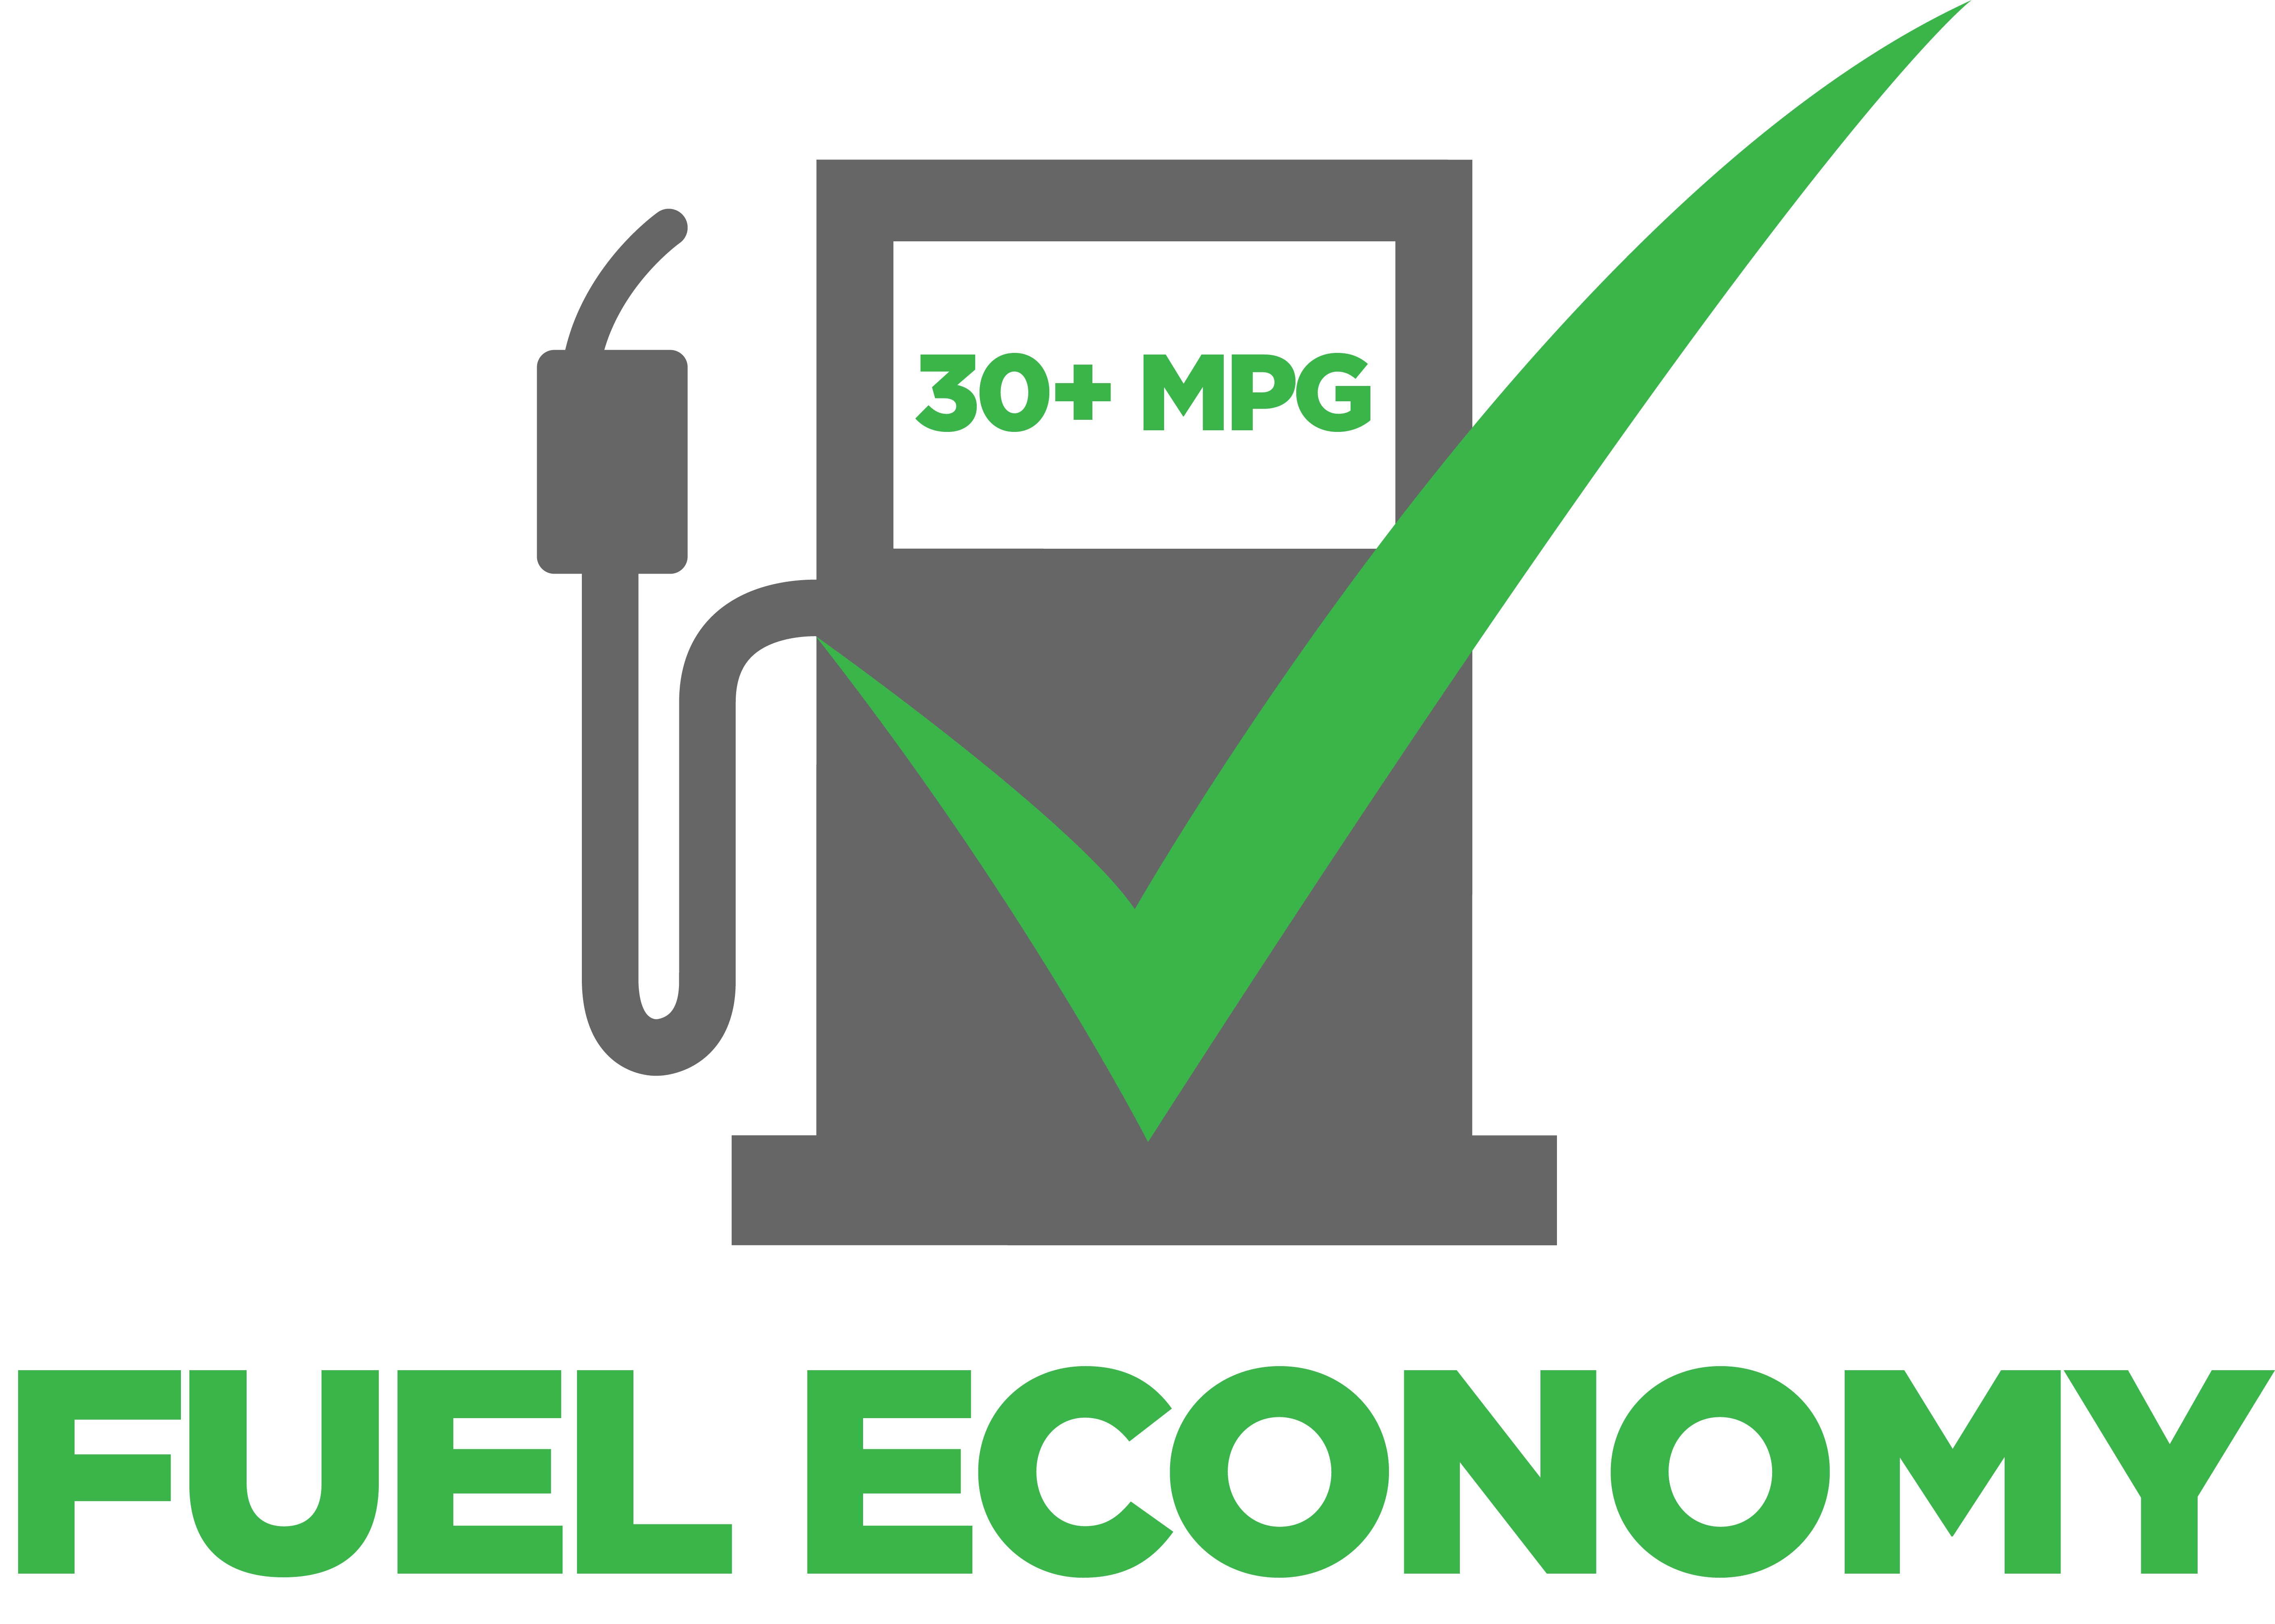 Fuel Econonmy